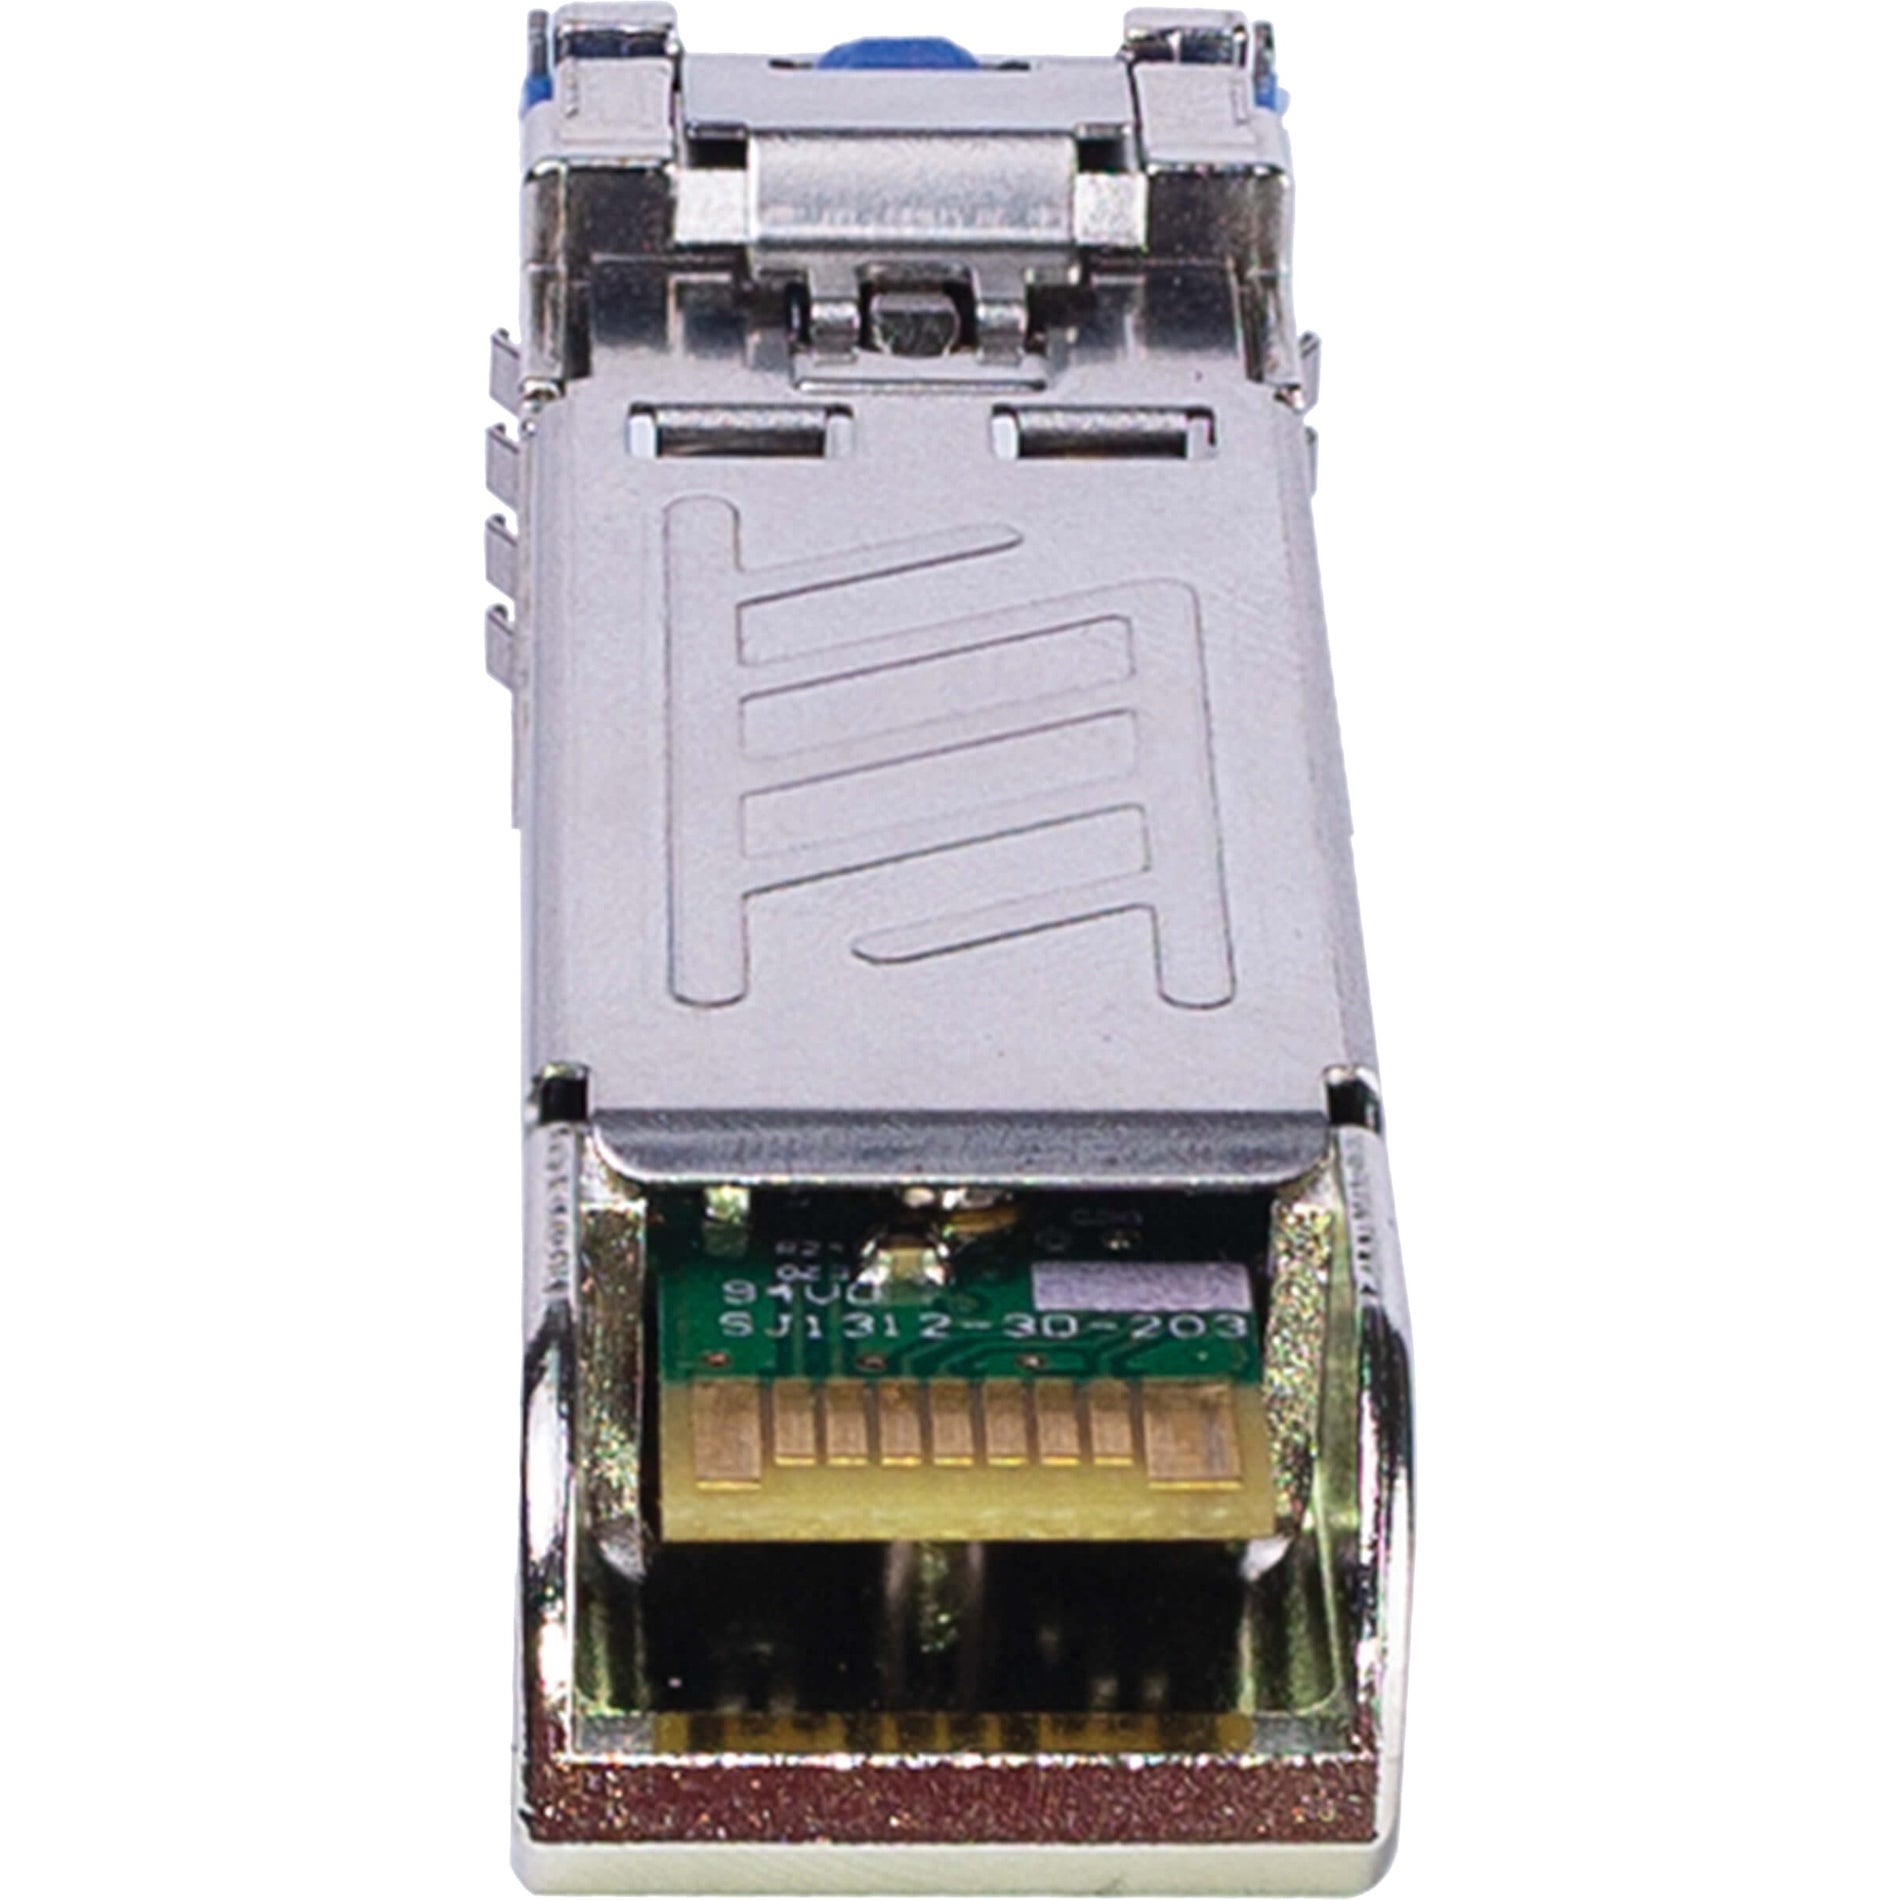 Tripp Lite N286I-1P25GLXD1 SFP (mini-GBIC) Module, 1 Year Limited Warranty, TAA Compliant, Gigabit Ethernet, Single-mode, Hot-swappable, Hot-pluggable